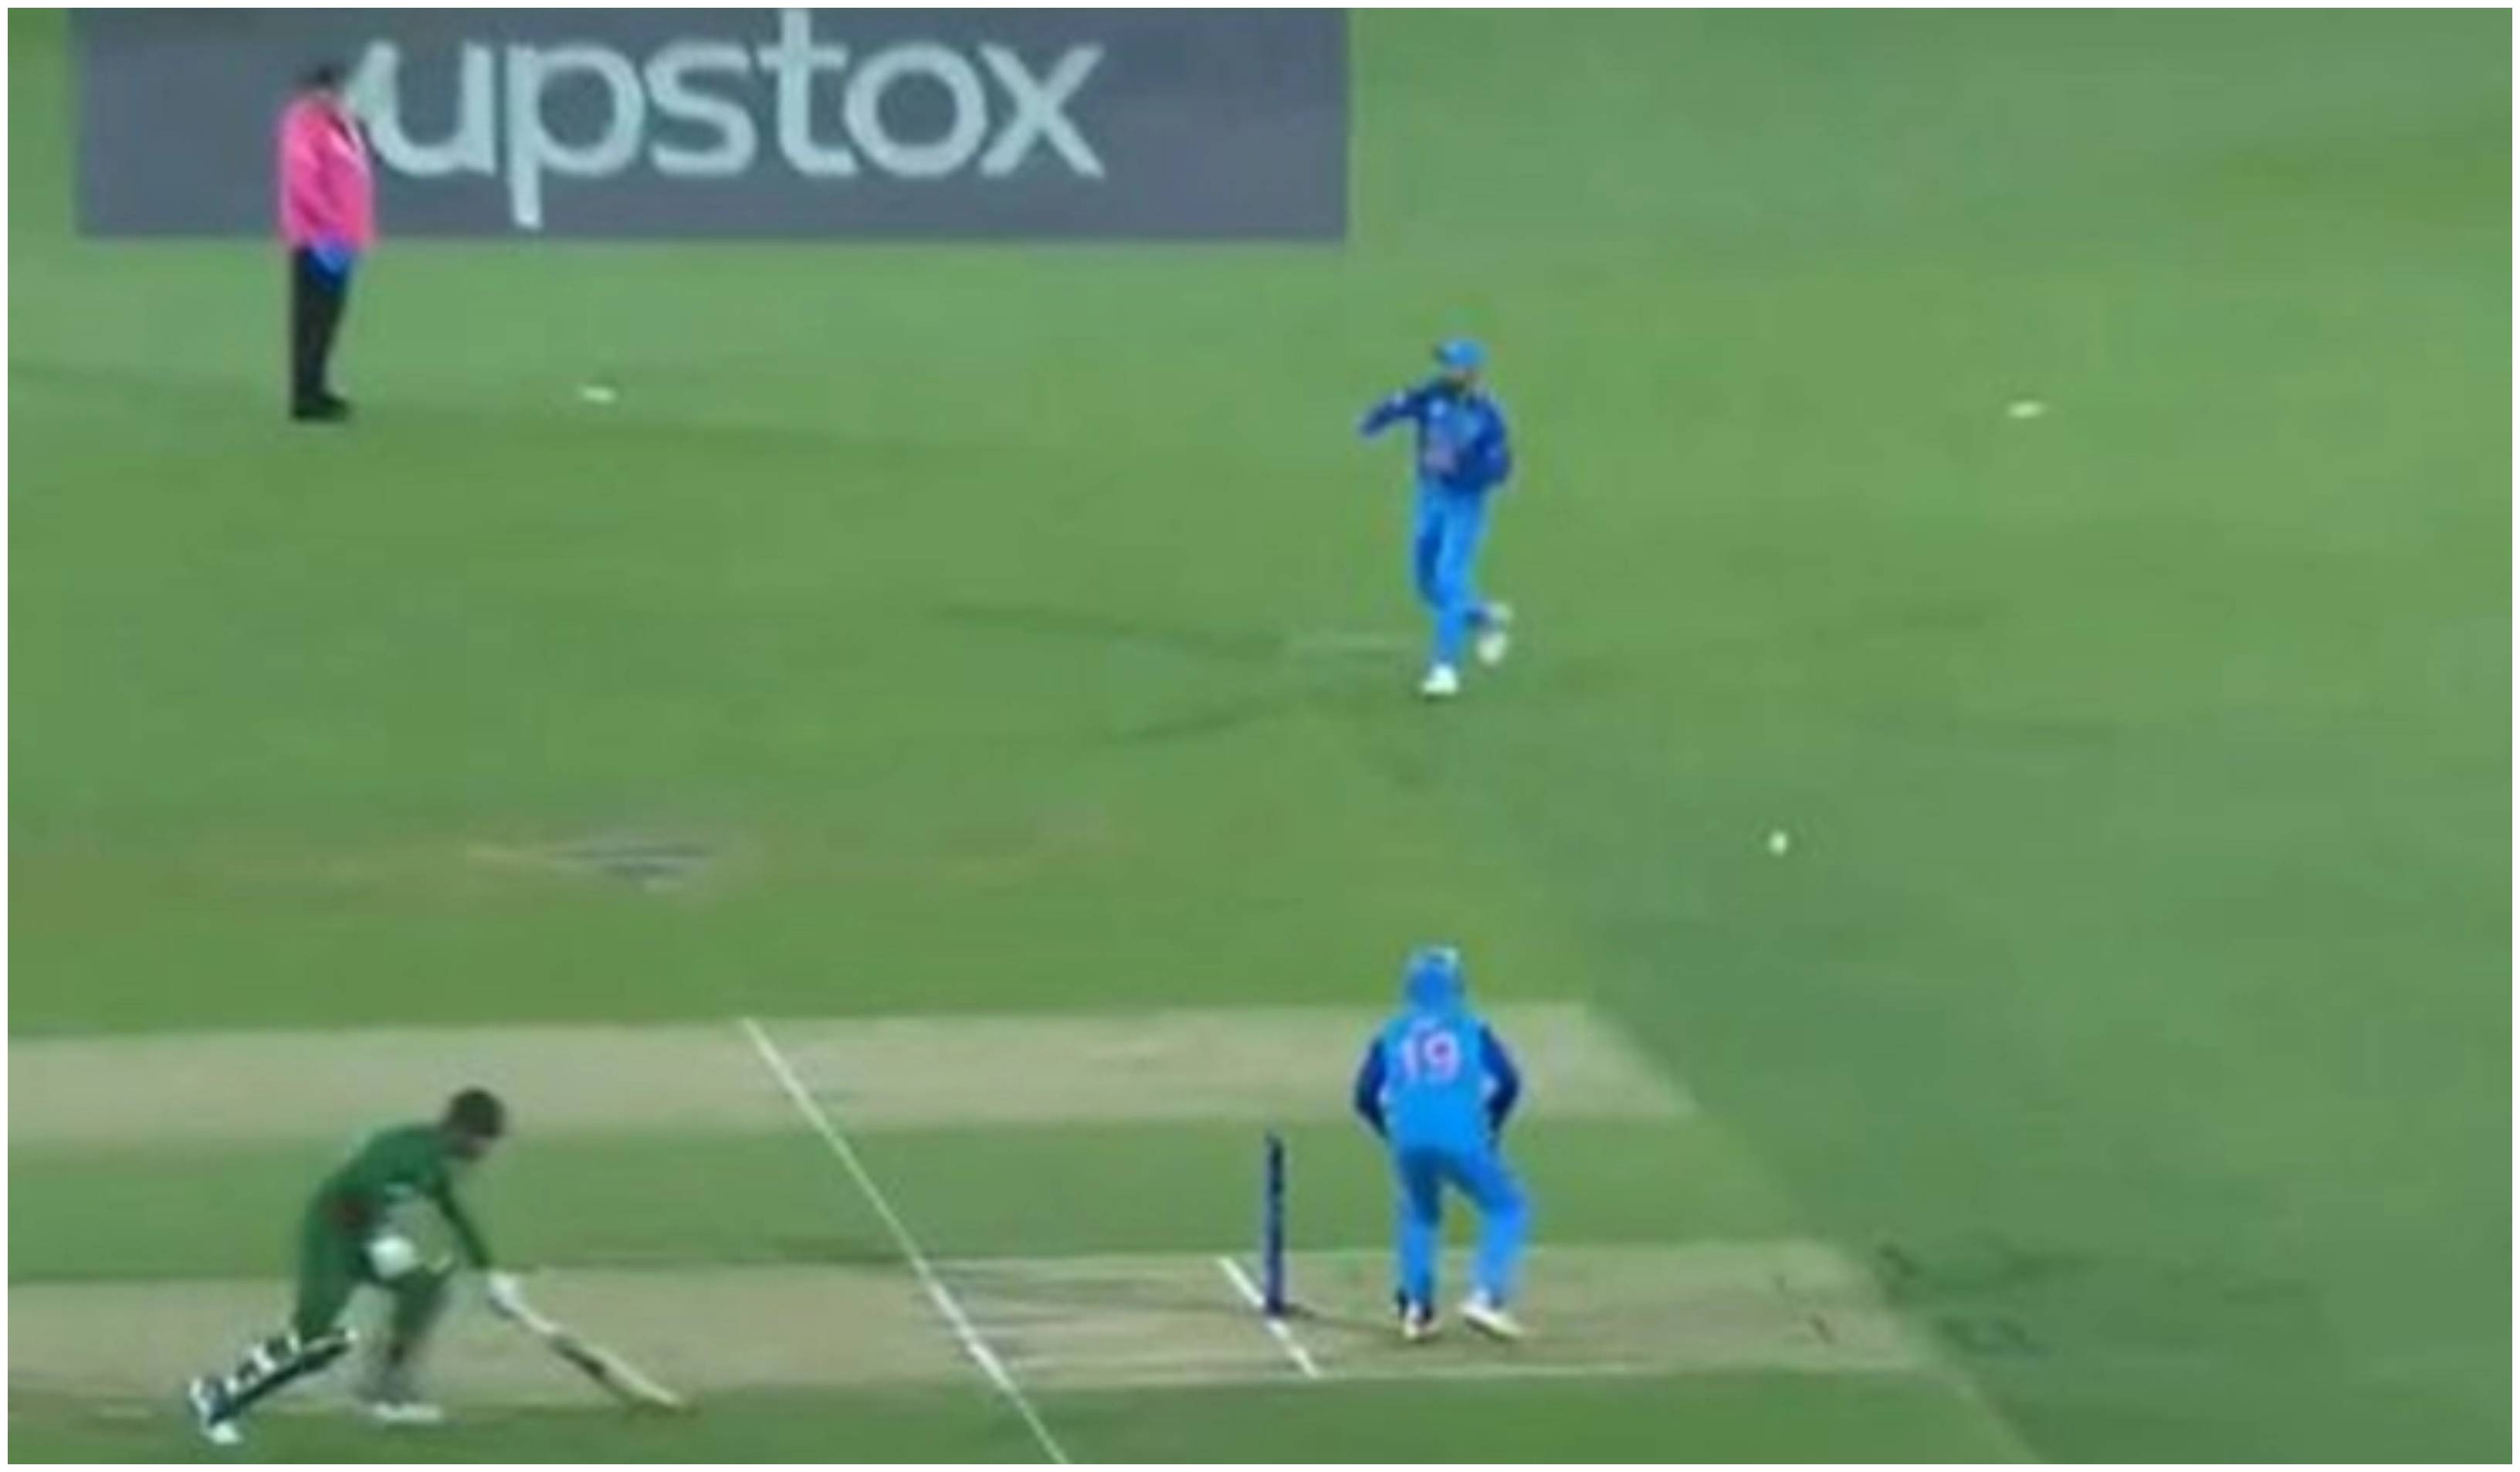 Virat Kohli relaying the throw at the non-striker's end | Screengrab